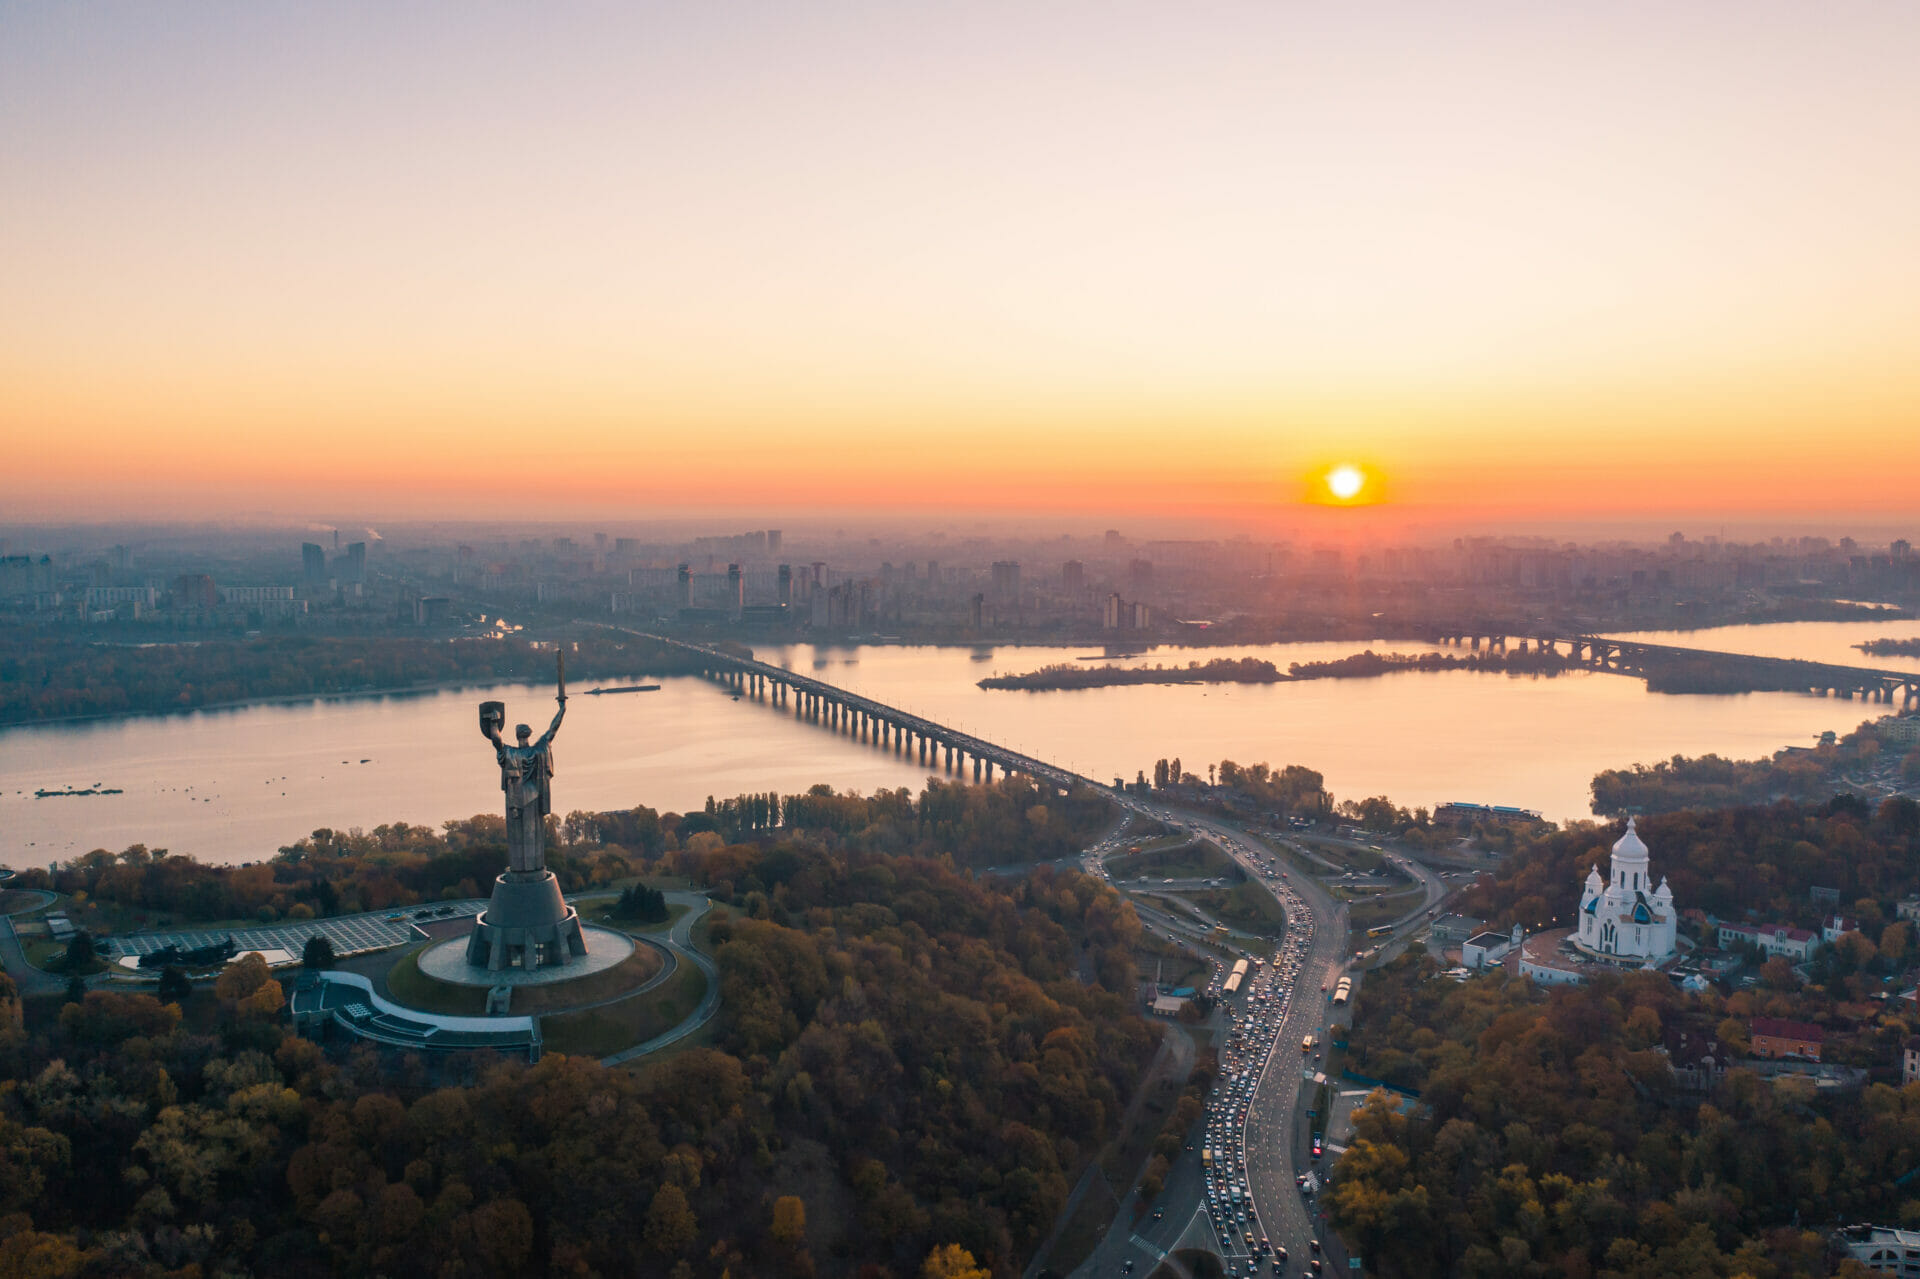 Kiev skyline over beautiful fiery sunset, Ukraine